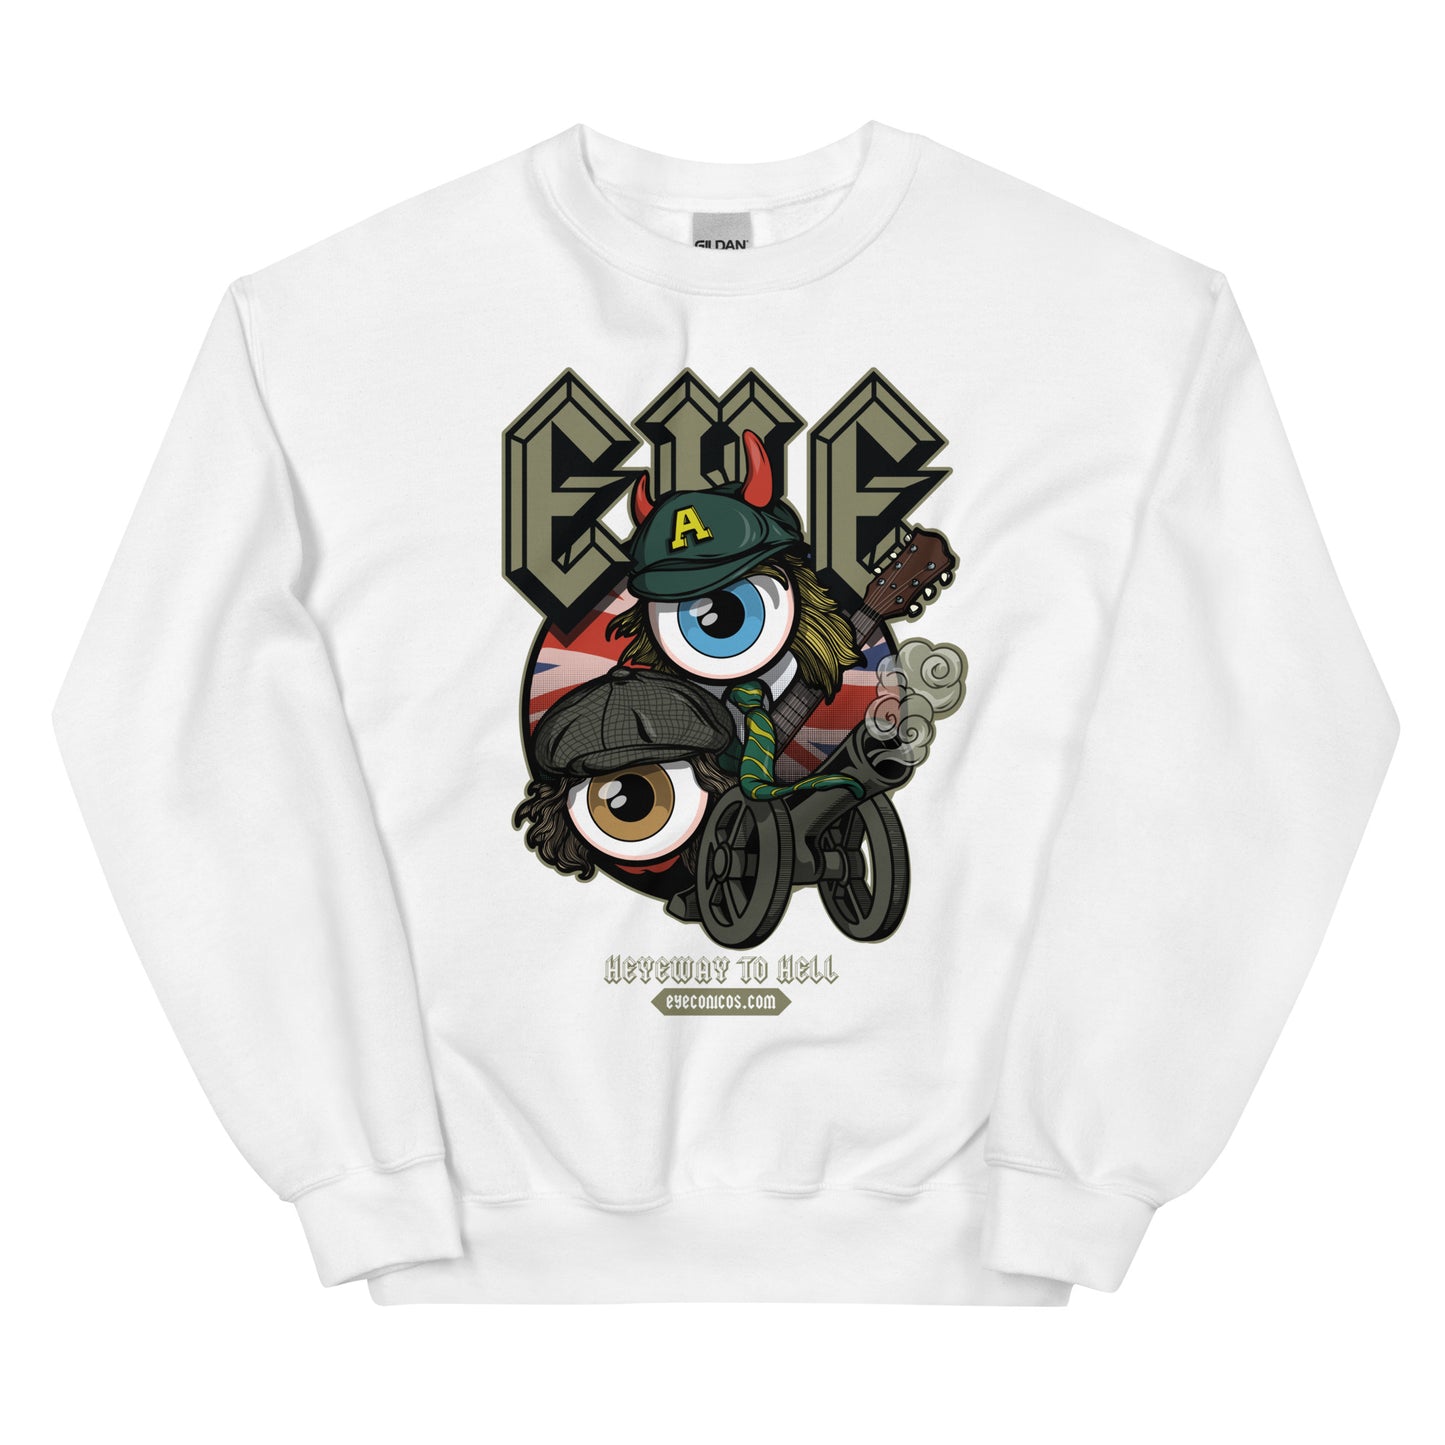 EYEC/DC Sweatshirt